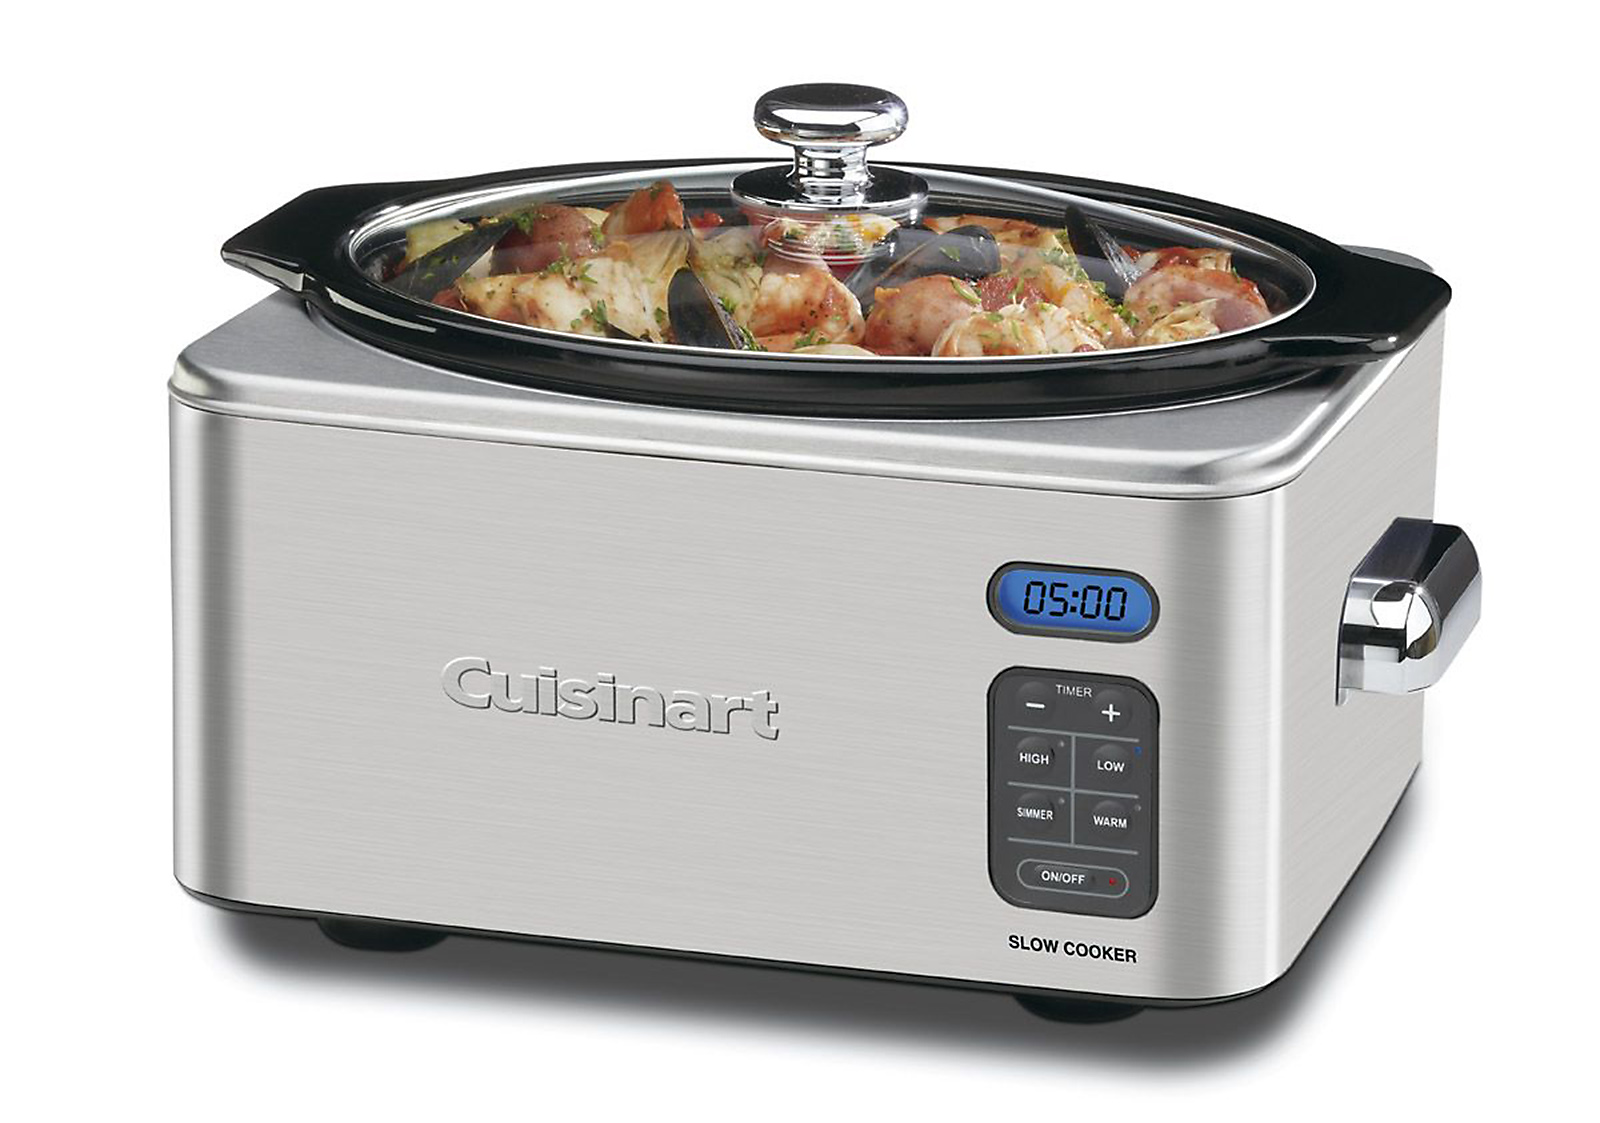 Cuisinart PSC-650 Slow Cooker  6-1/2 Quart  Programmable  1 slow cooker